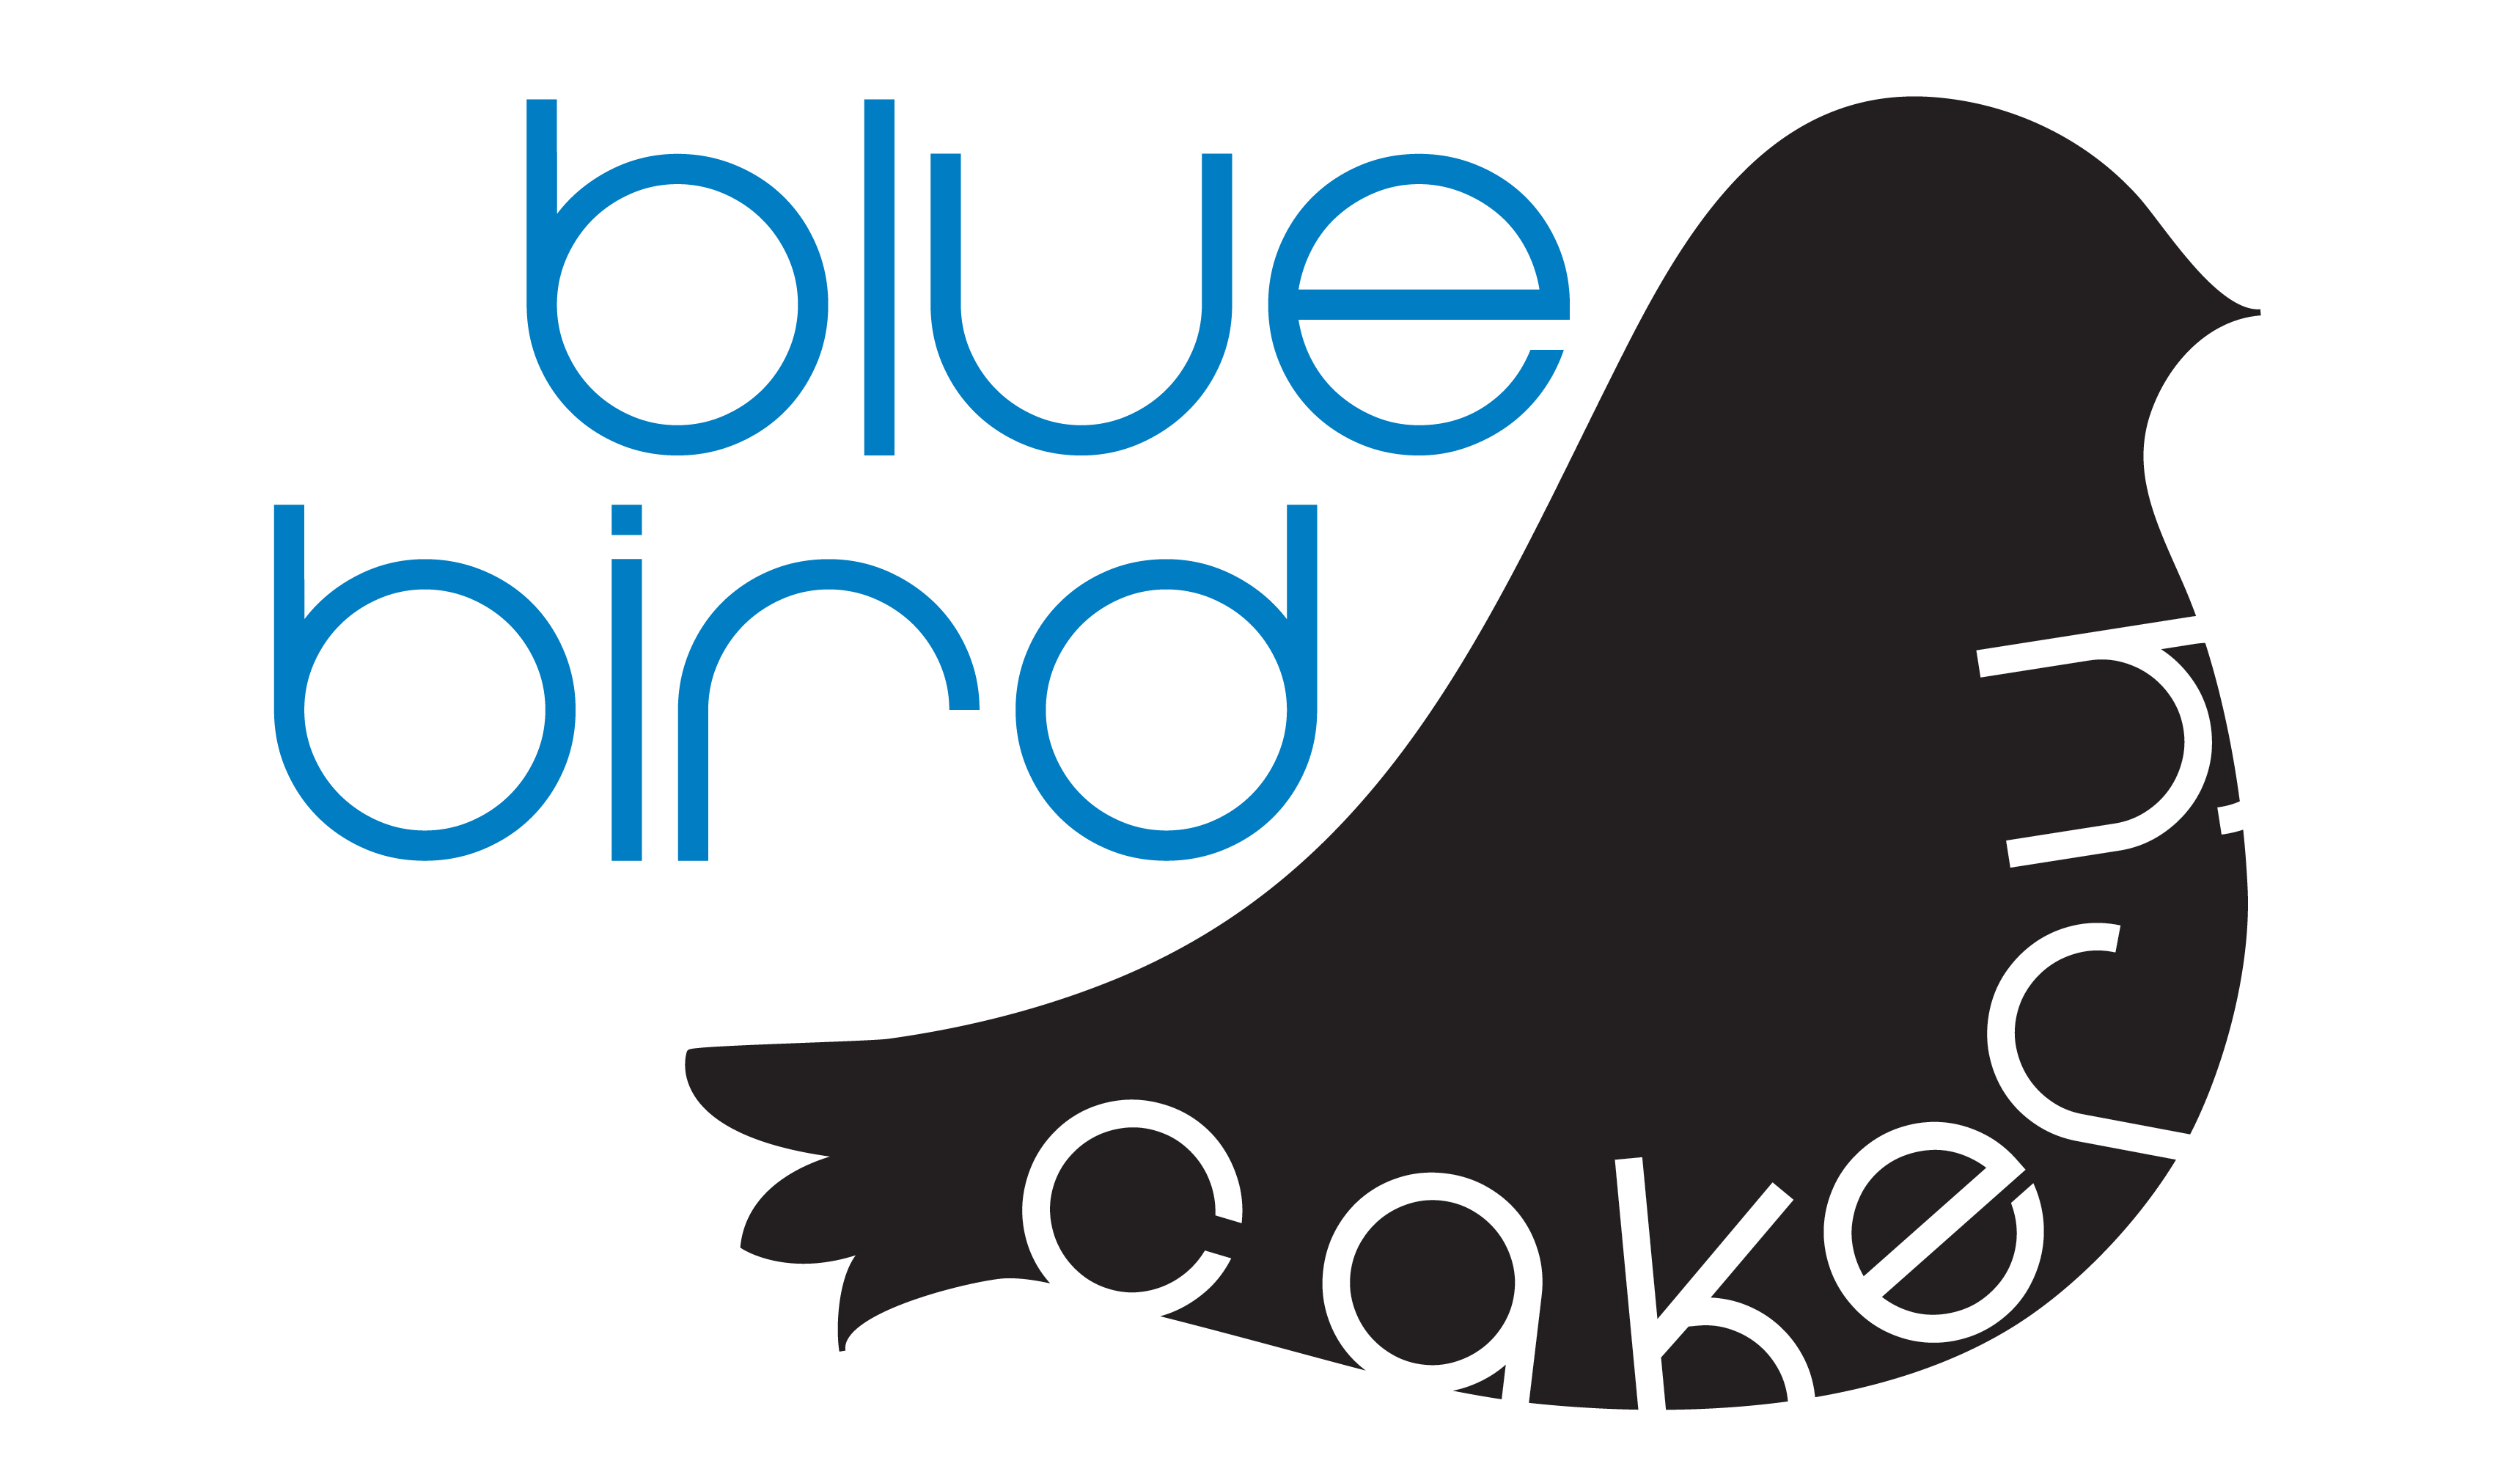 Cakery Logo - BlueBird Cakery Logo